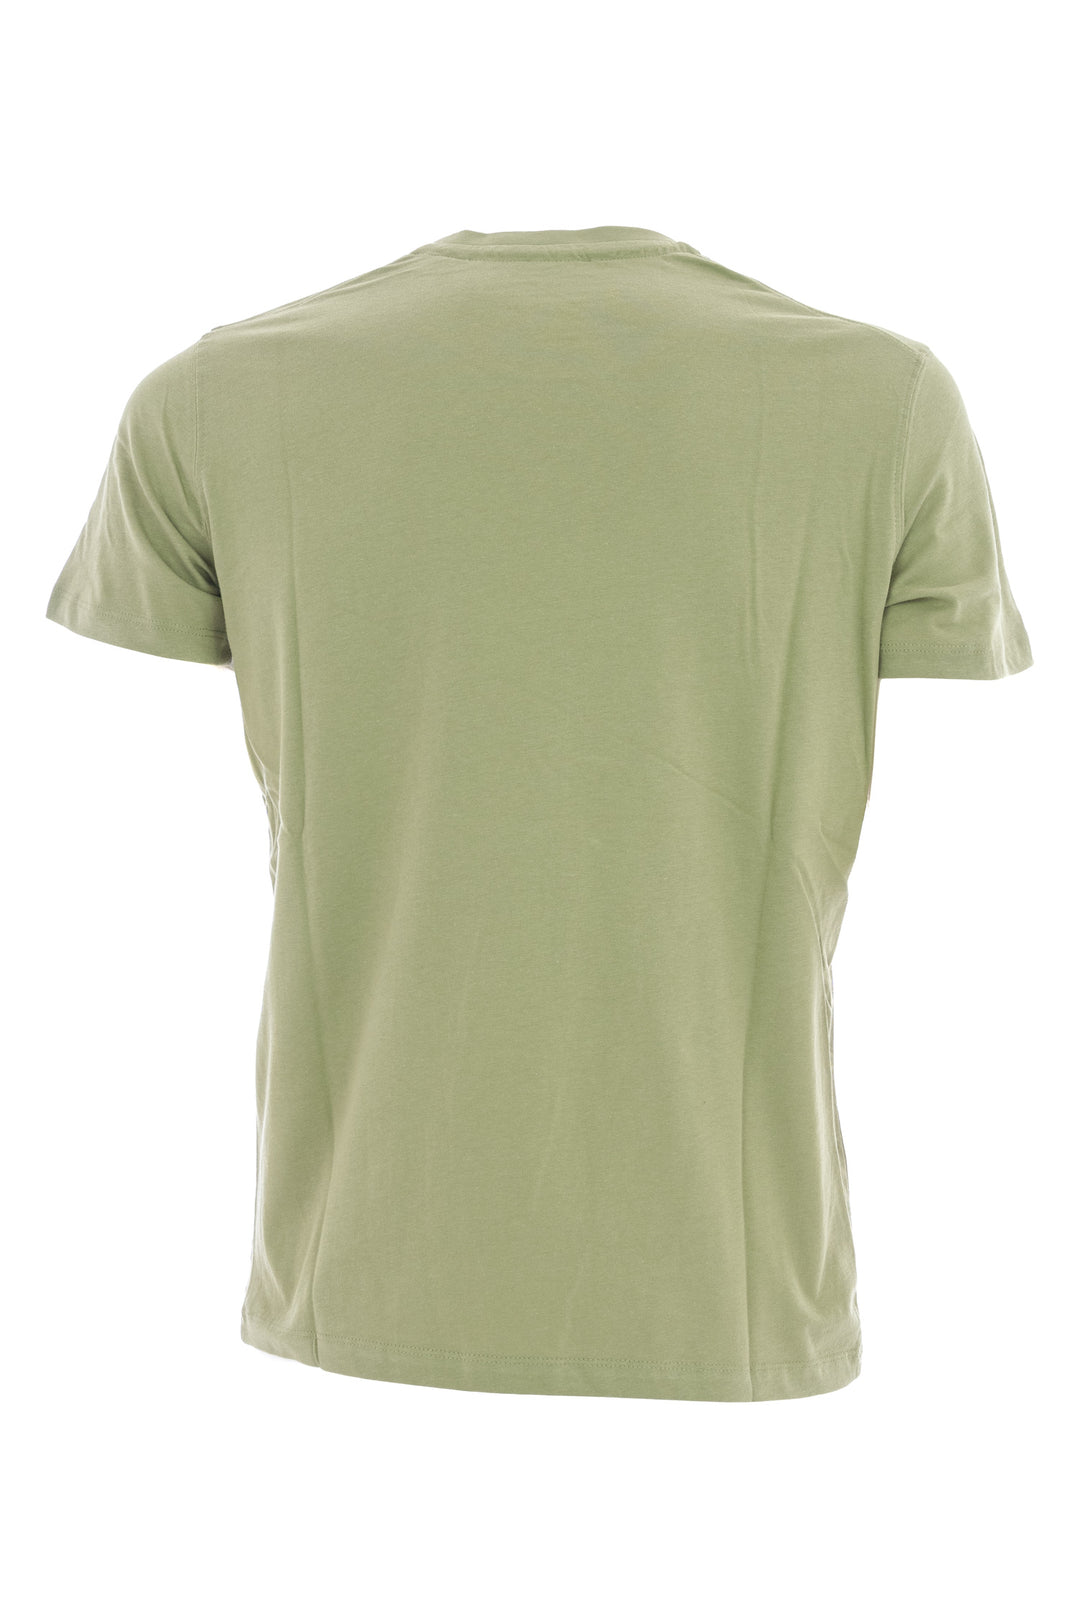 U.S. POLO ASSN. T-Shirt in cotone verde - Mancinelli 1954